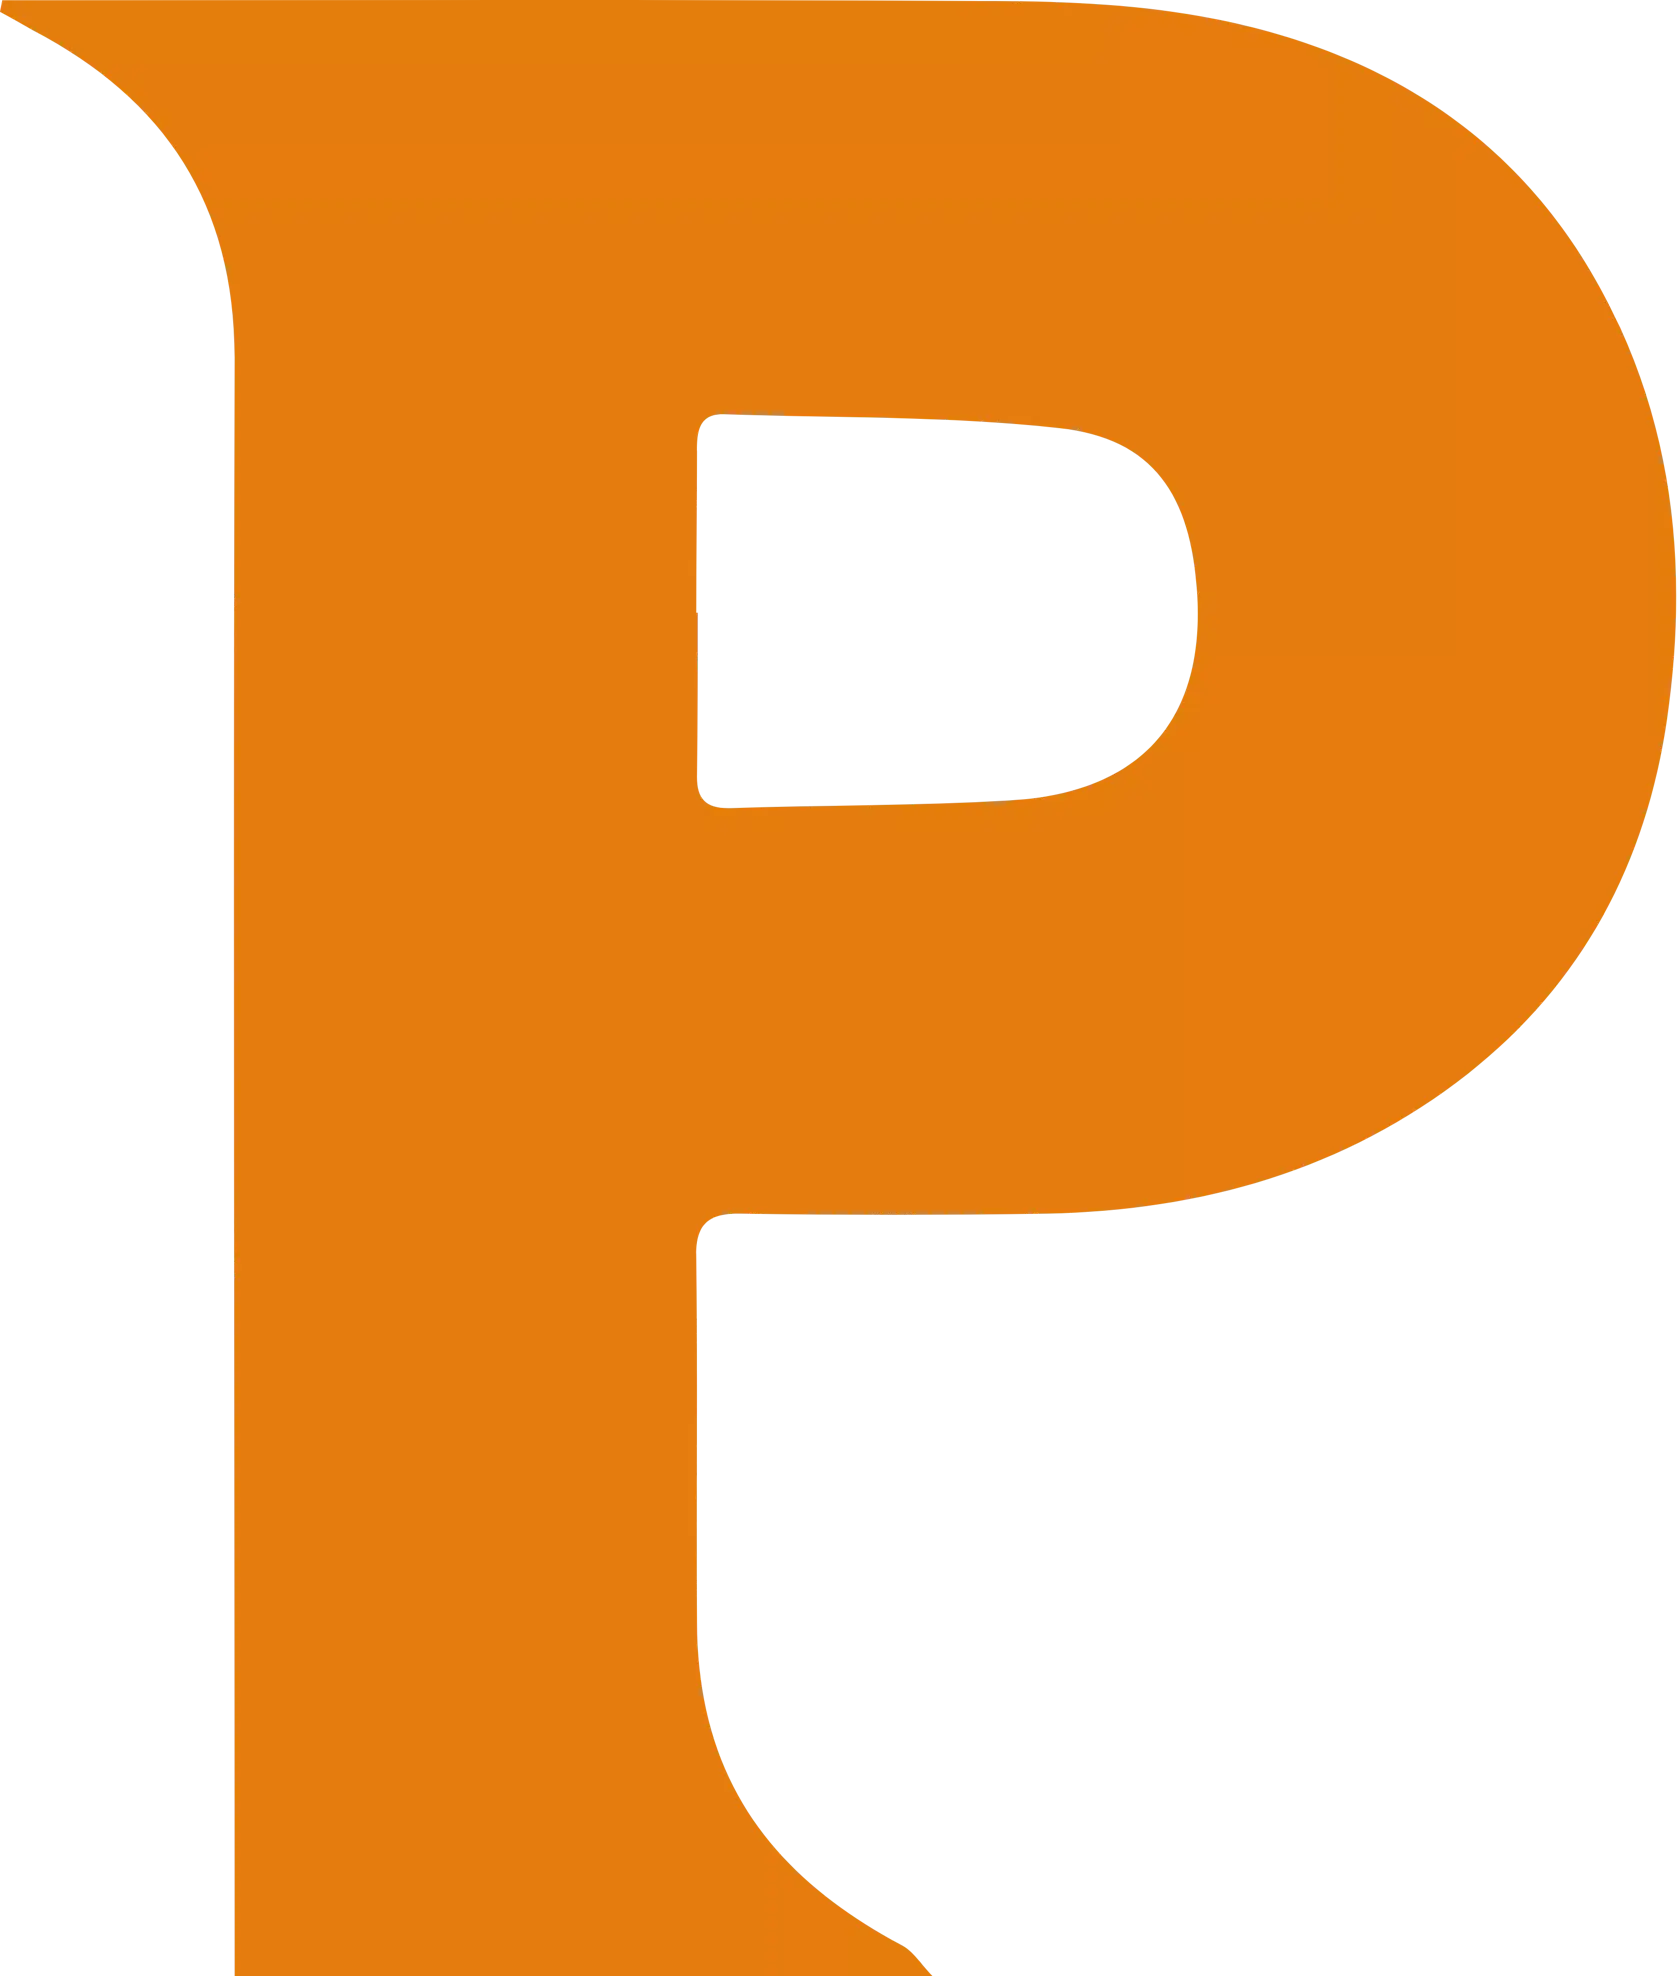 City of Providence logo